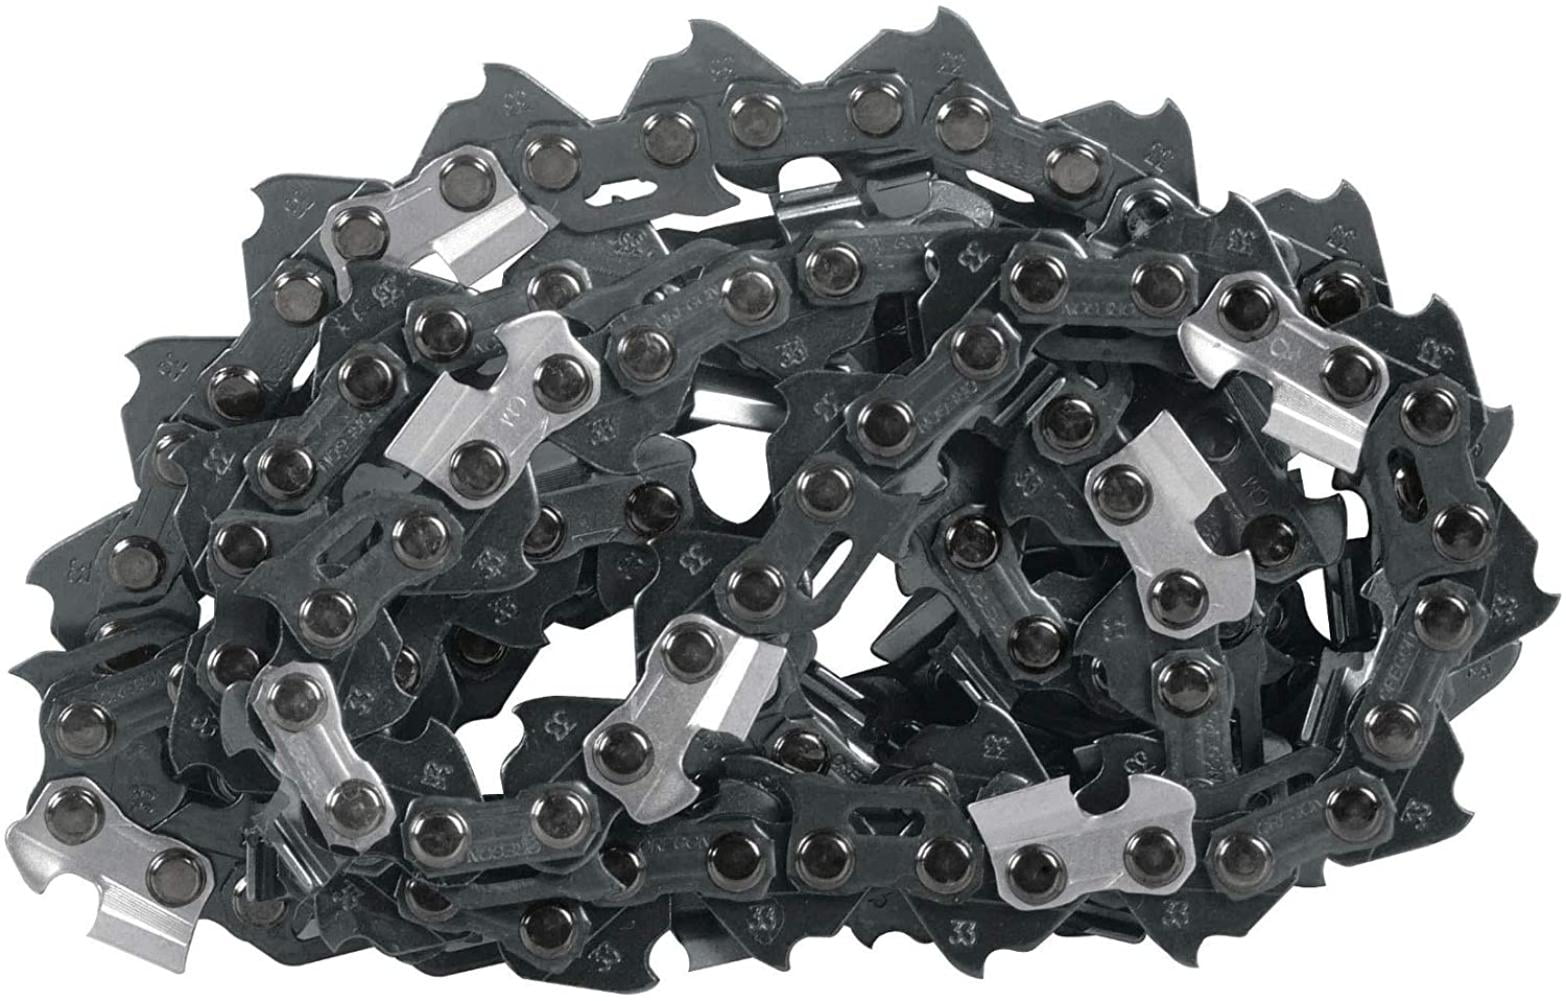 For Stihl Husqvarna Chainsaw Chain Master-Links Repair Preset Tie Straps Replace 